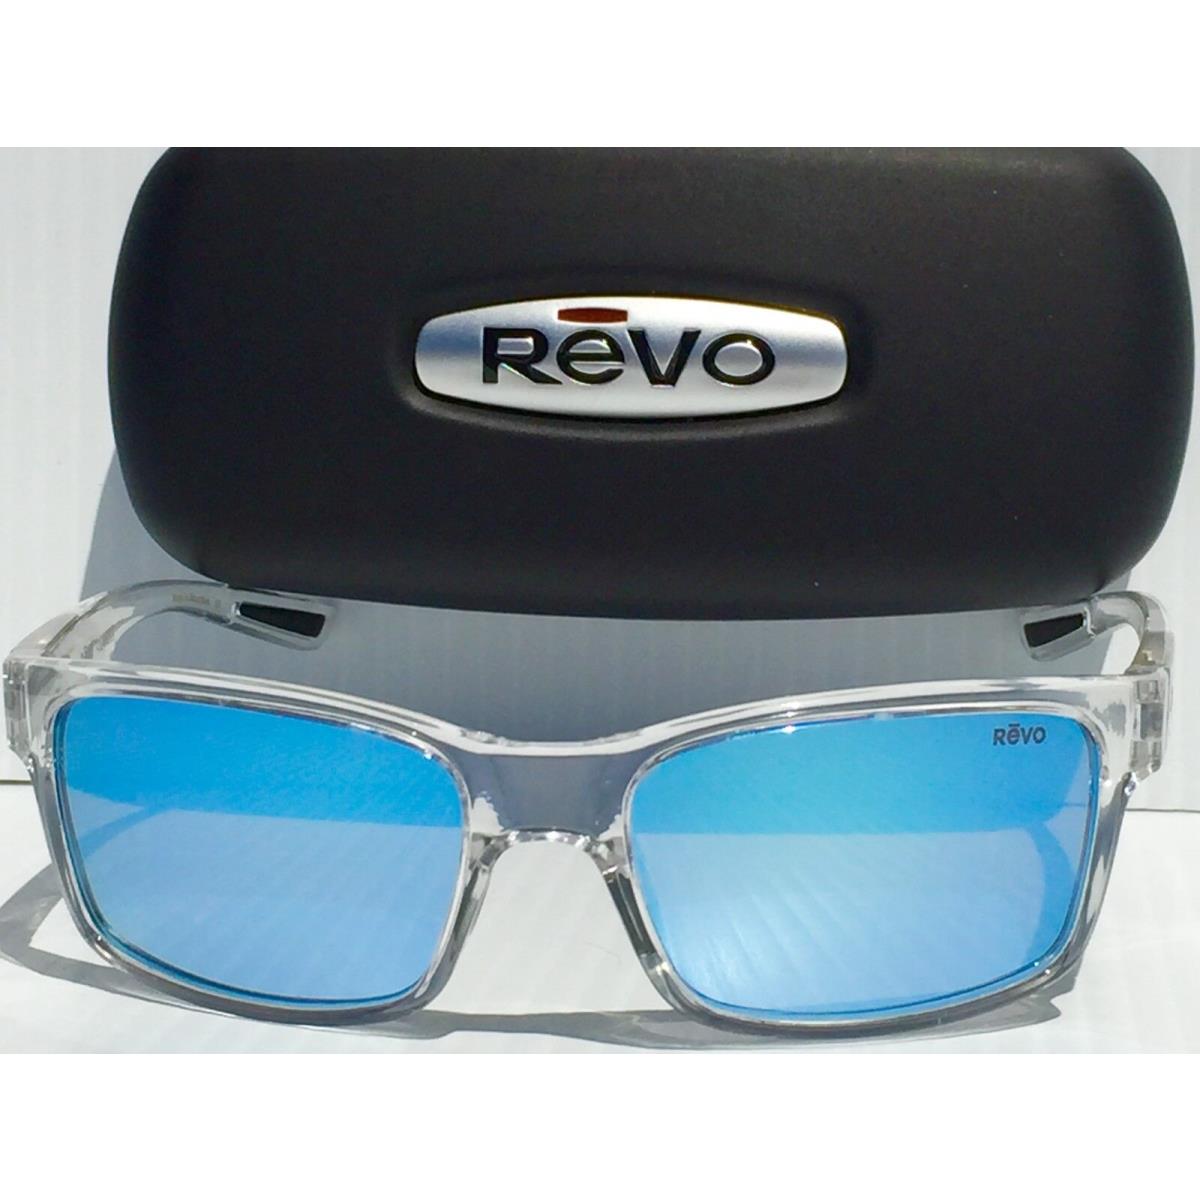 Revo Crawler Clear w Blue Polarized Lens Sunglass RE 1027 09 BL